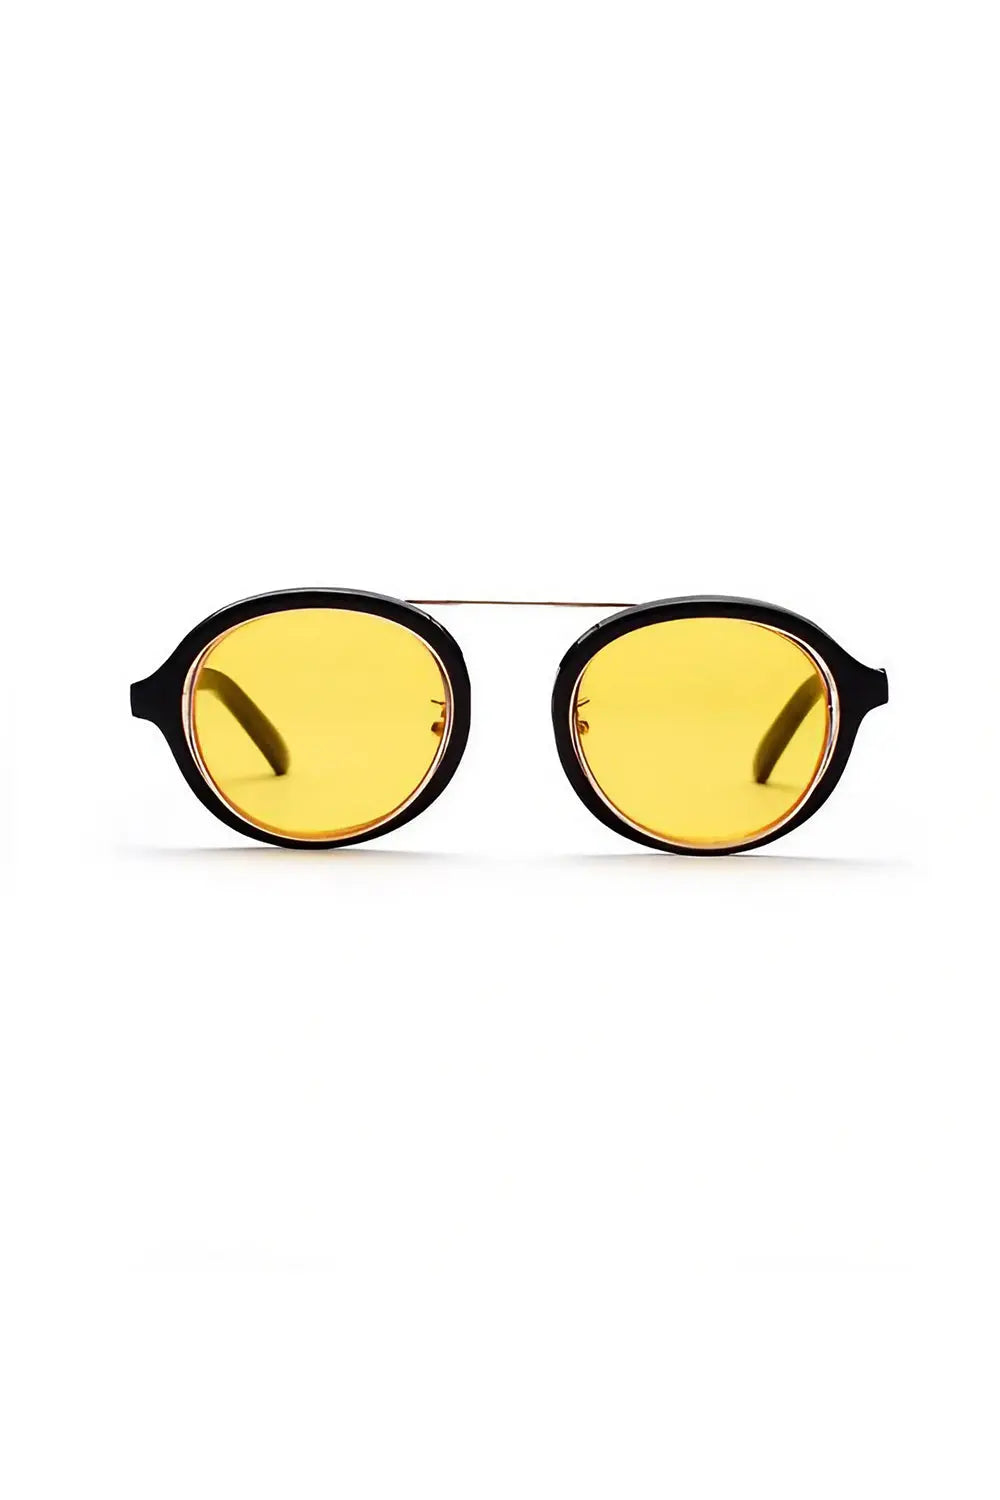 Round Vintage Sunglasses - Yellow - Strange Clothes